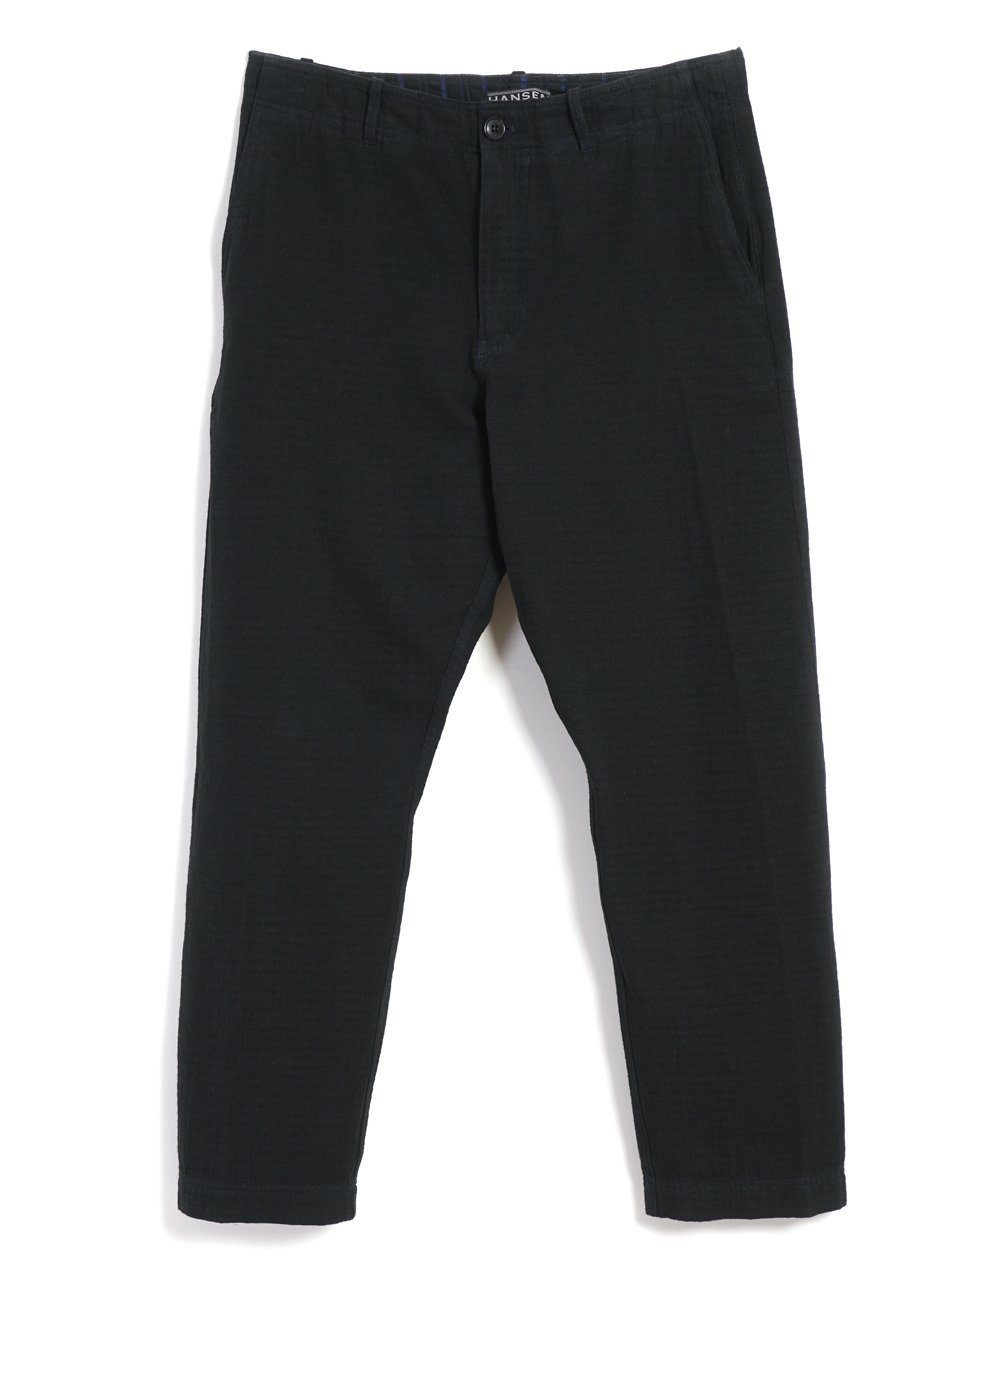 HANSEN GARMENTS - TRYGVE | Wide Cut Cropped Trousers | Black - HANSEN Garments